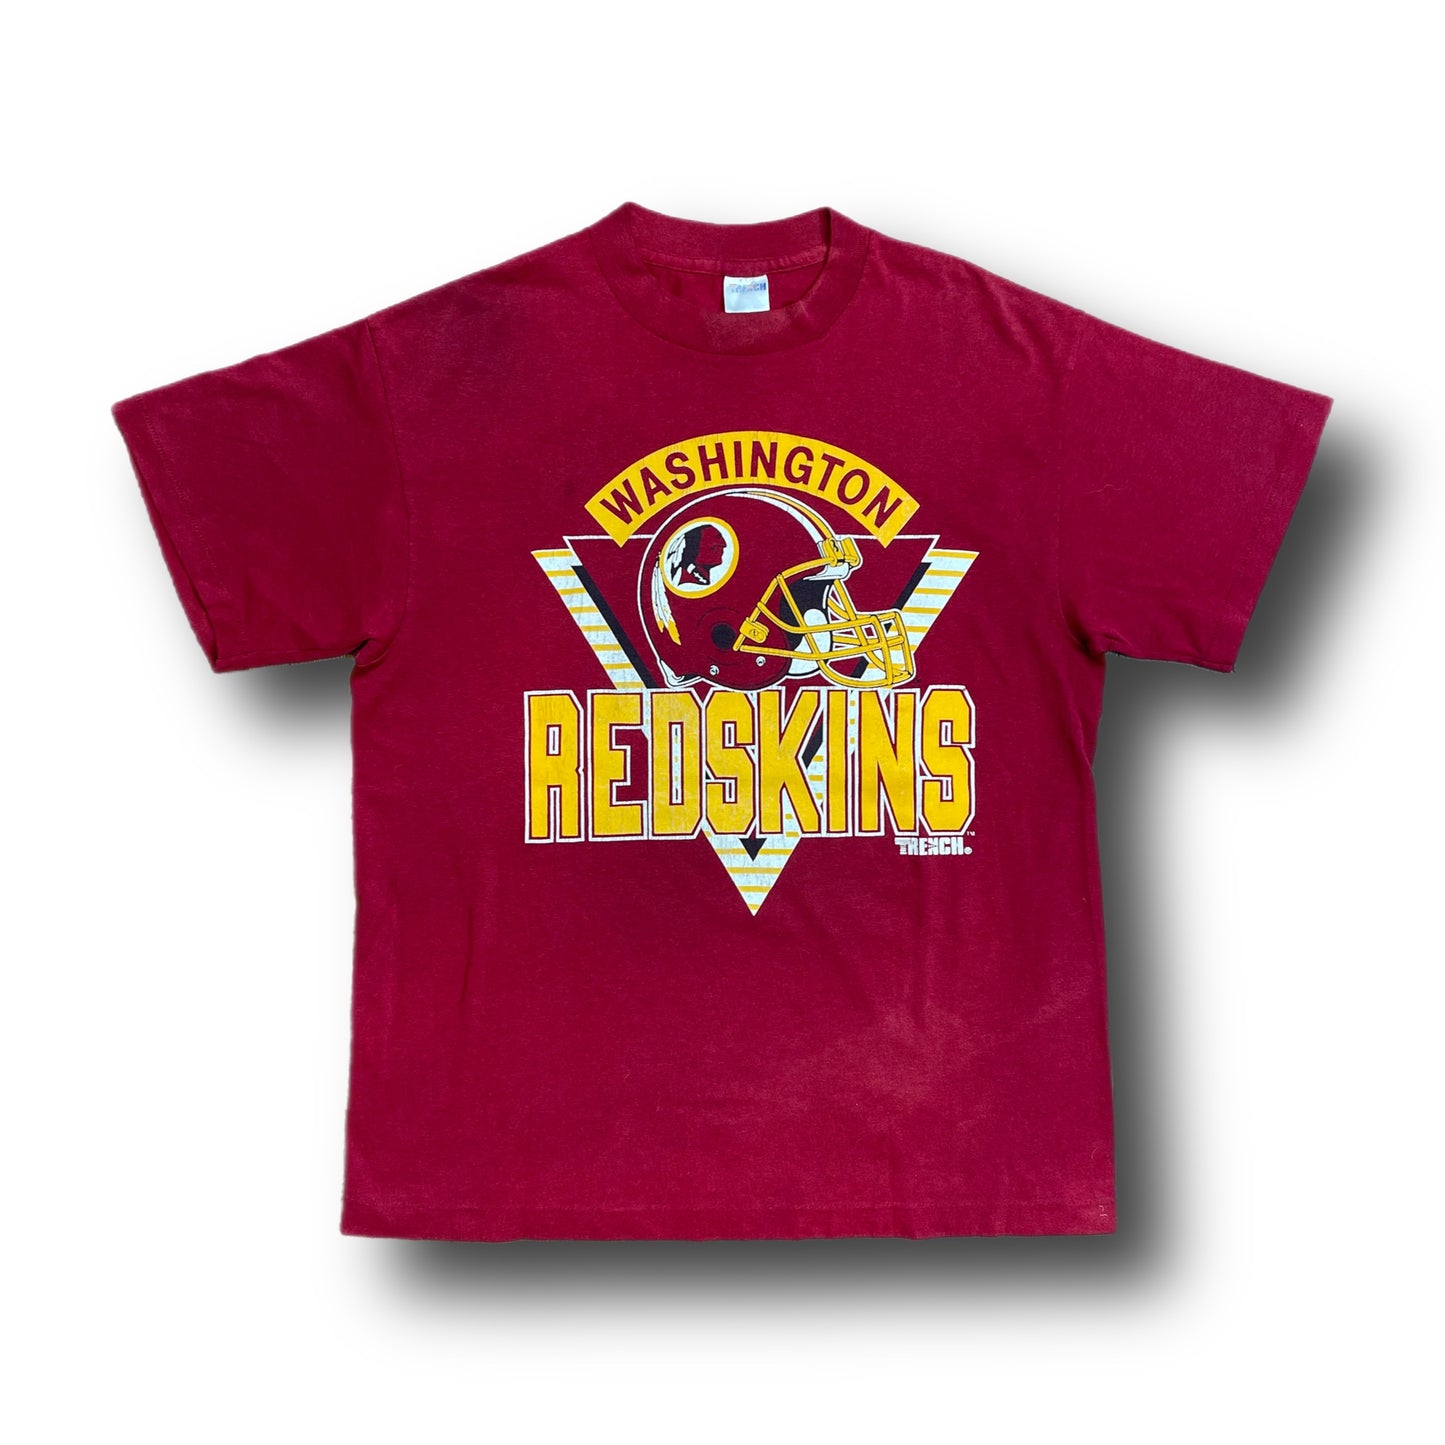 Vintage Washington Redskins (NFL) Shirt - L/XL